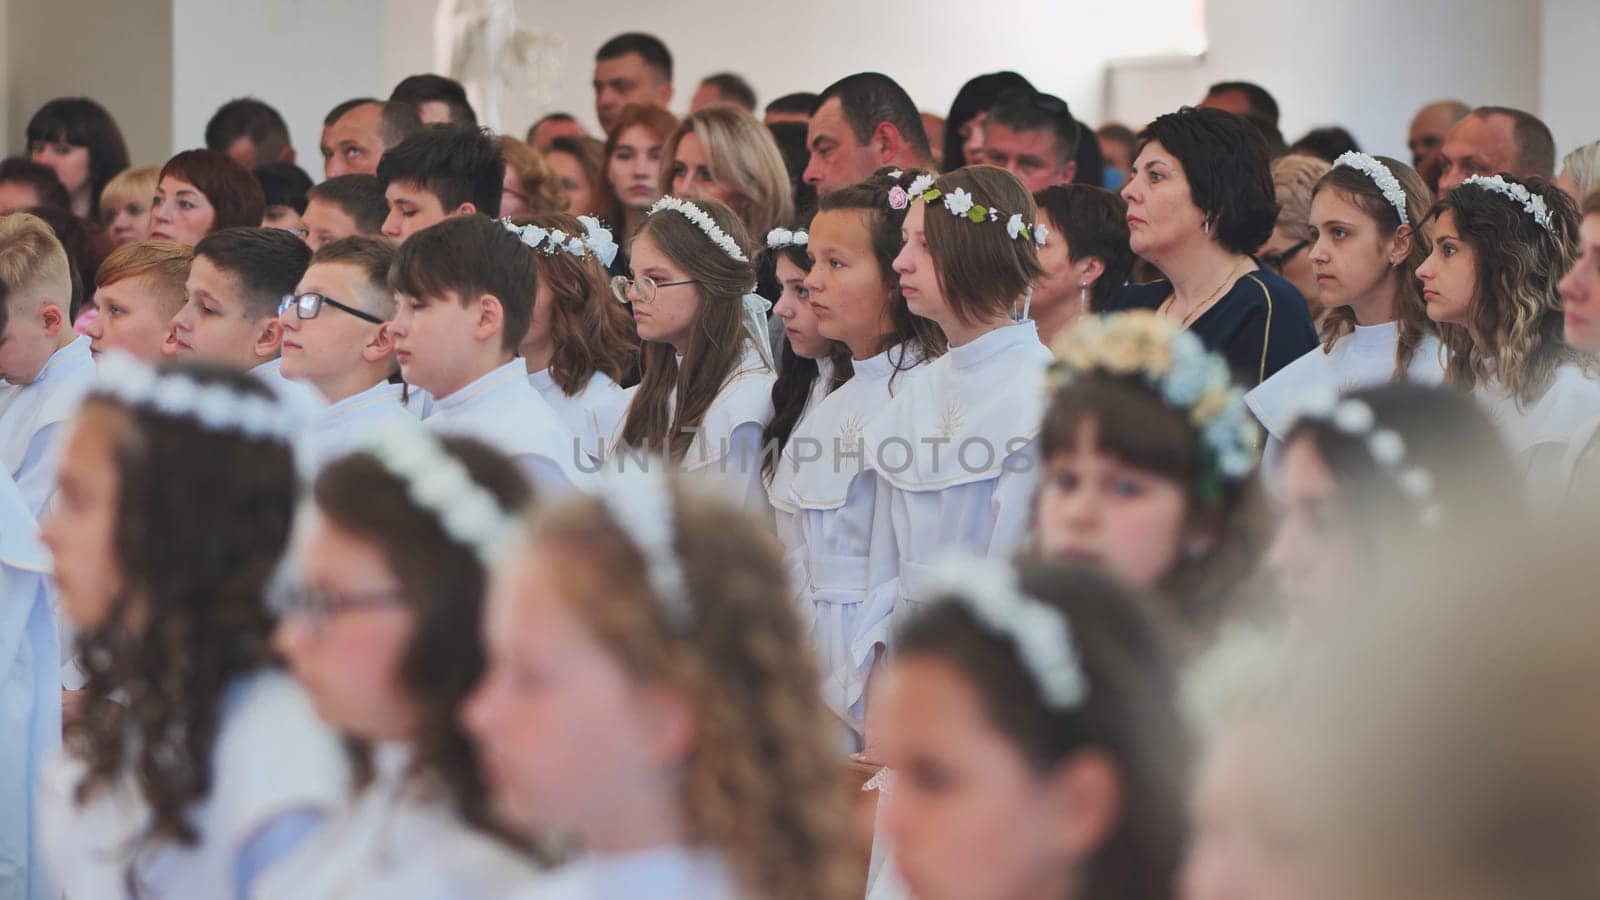 Children in a Catholic church during their first communion